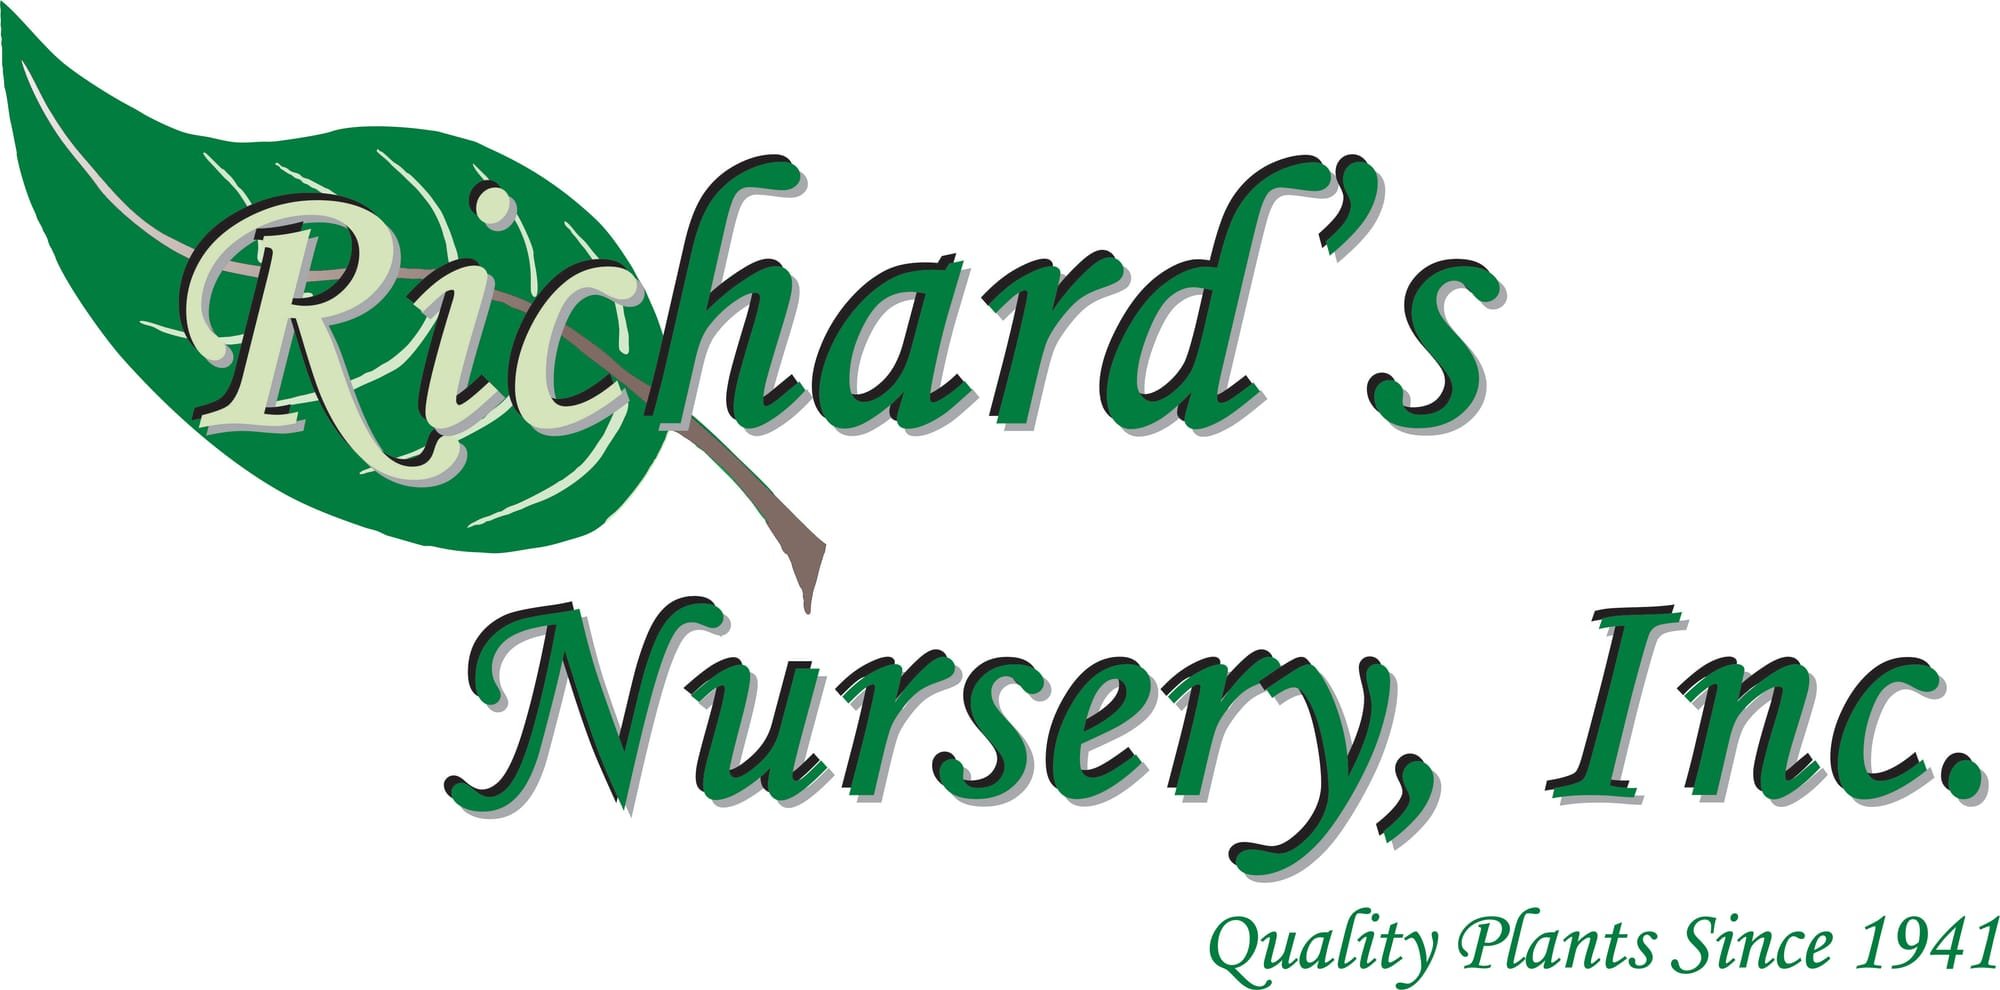 Richard's Nursery, Inc.